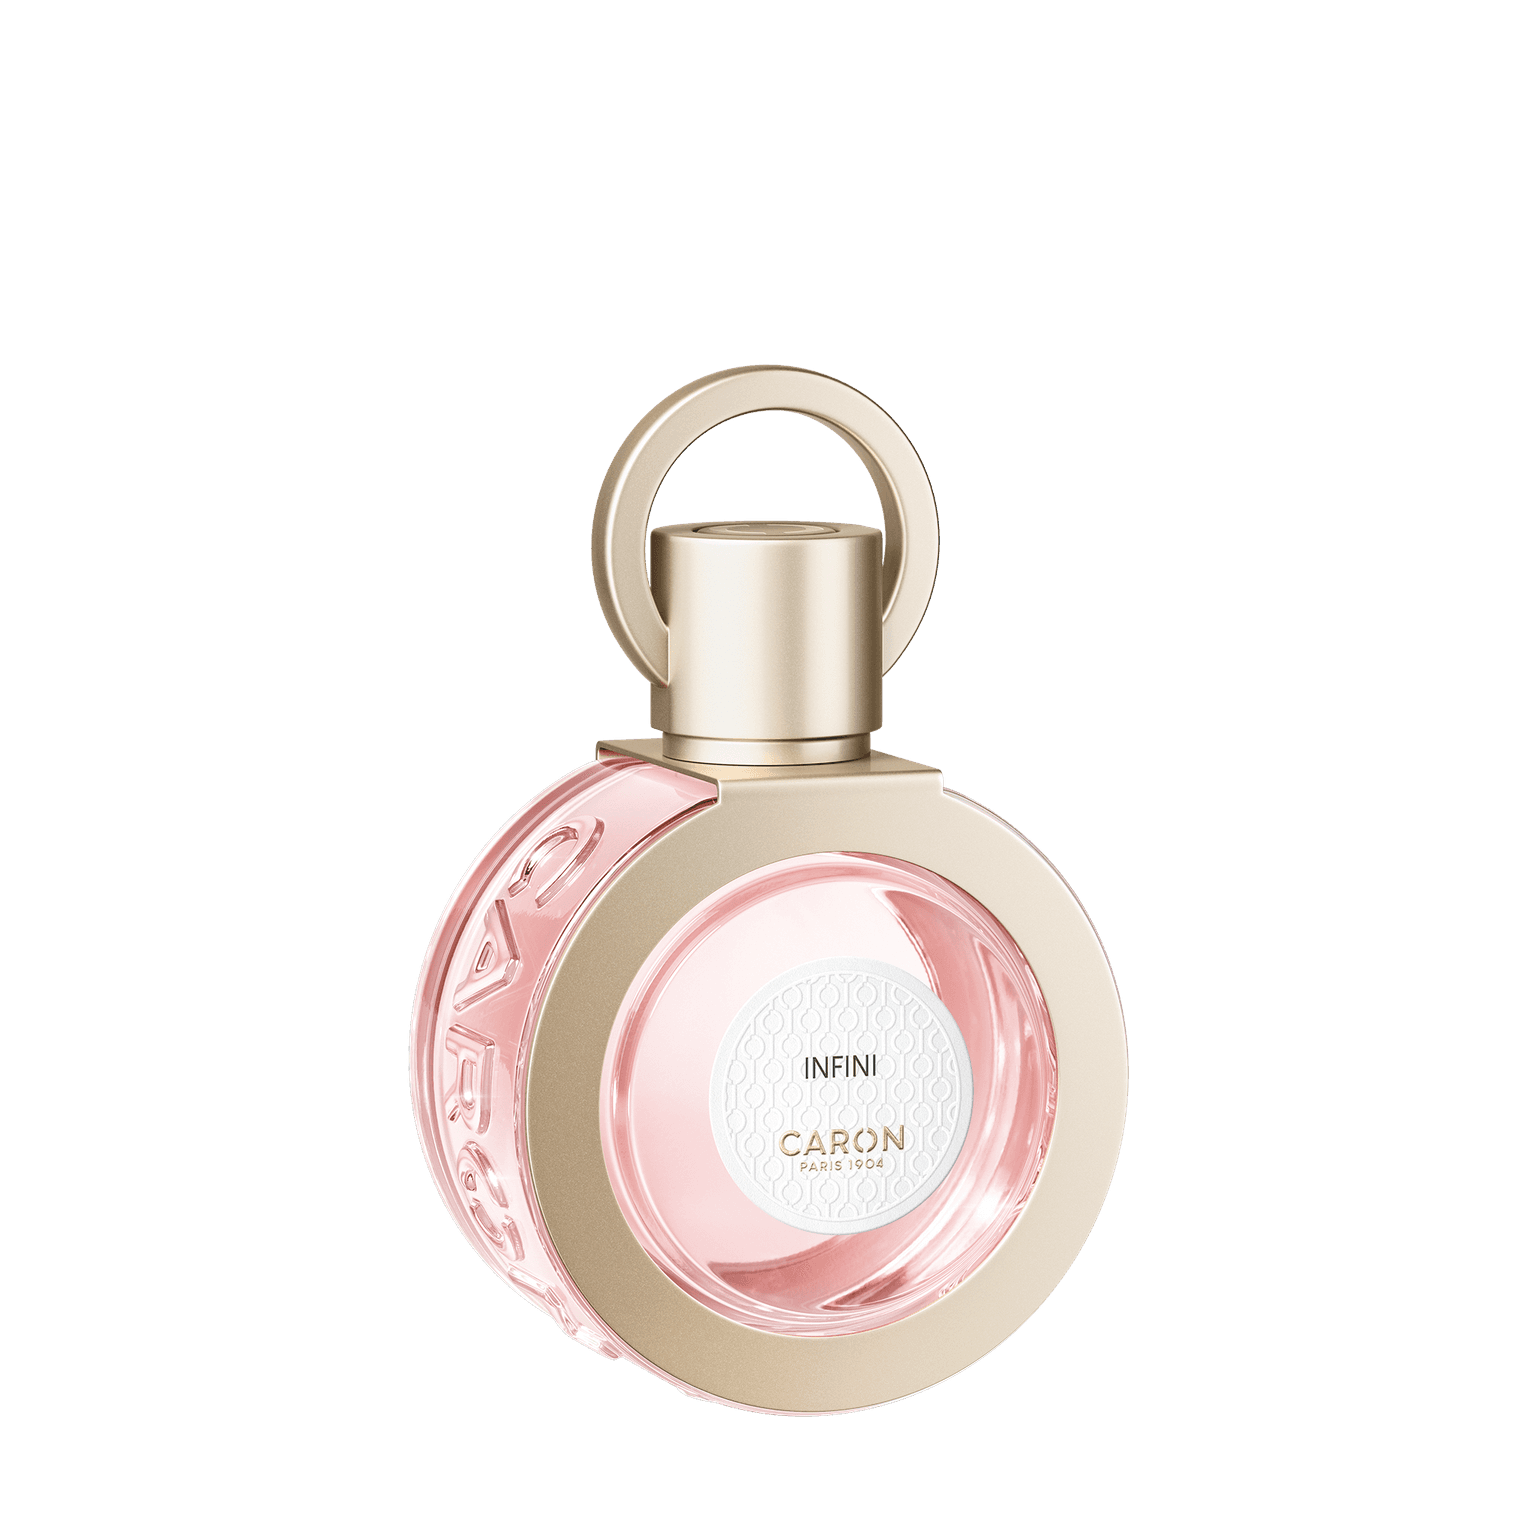 Caron Infini 50ml | Perfume Lounge.png